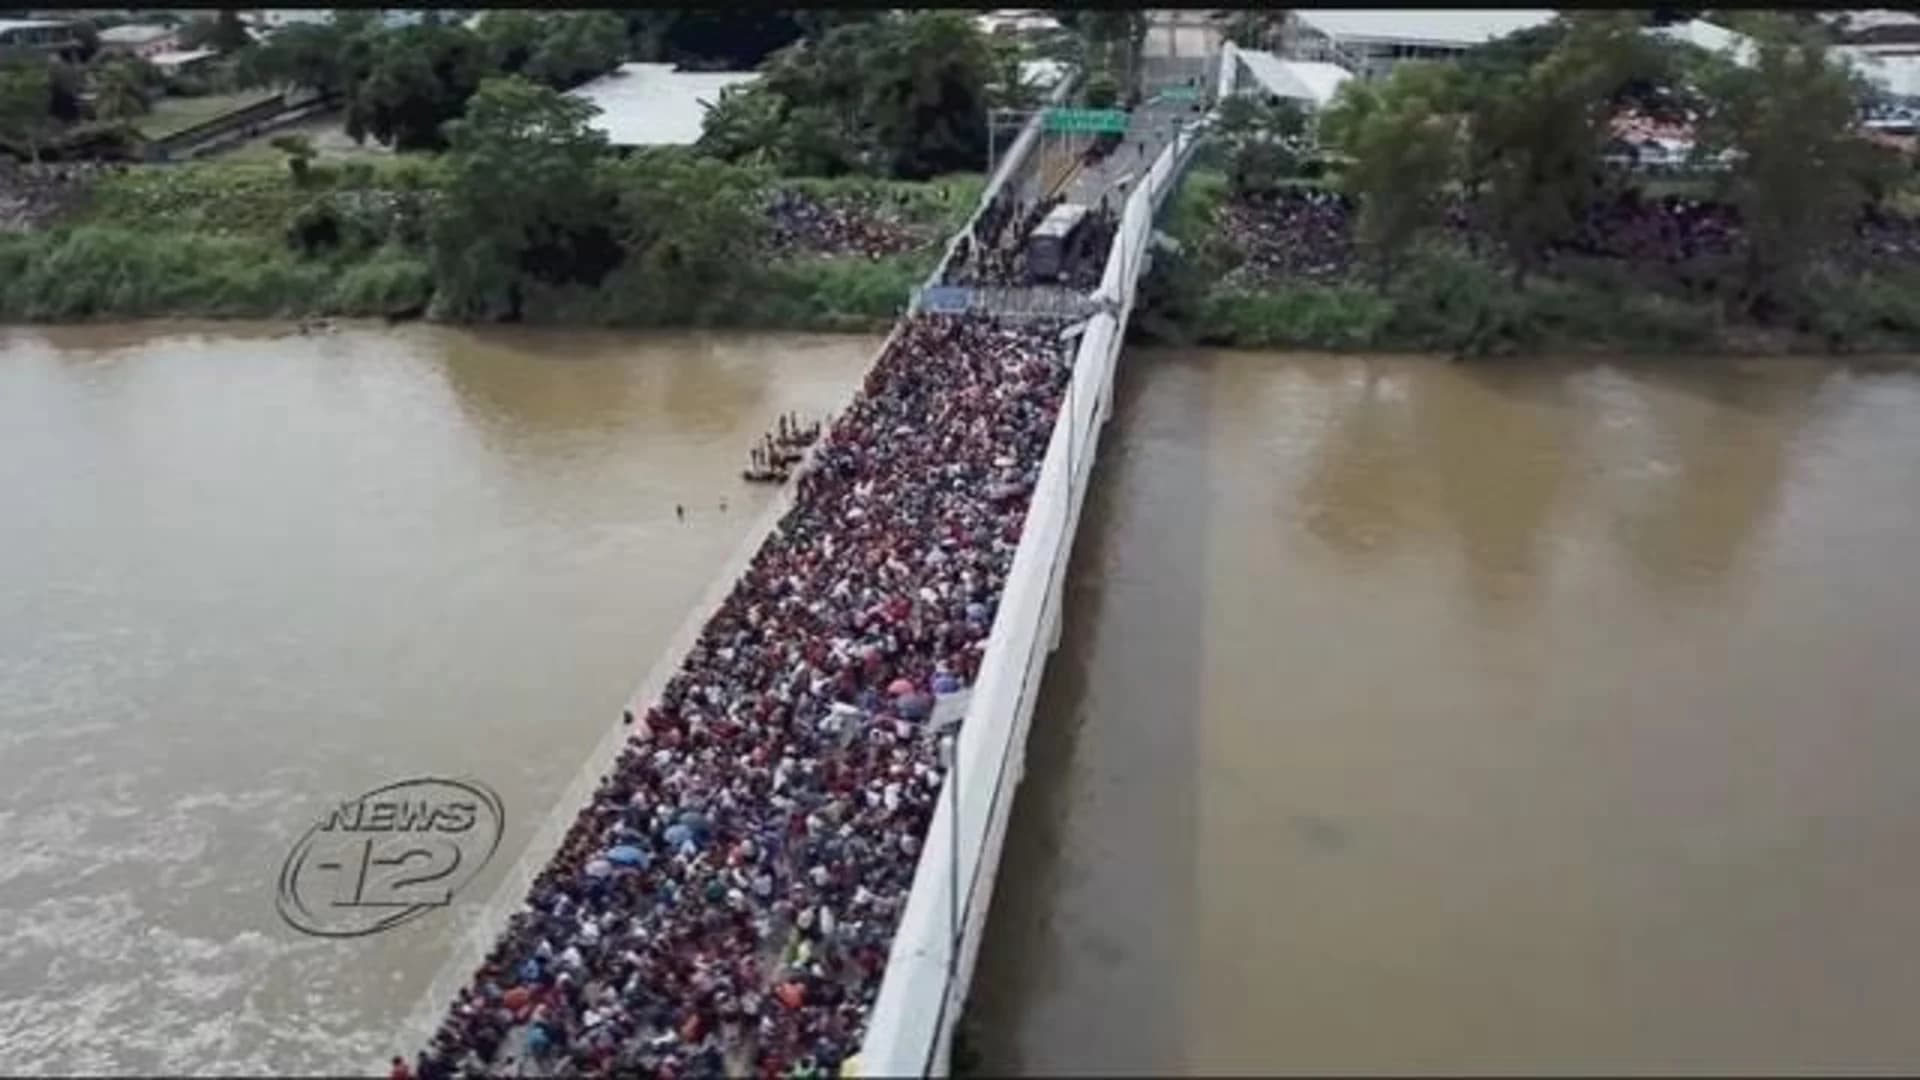 Growing caravan of migrants pushes deeper into Mexico